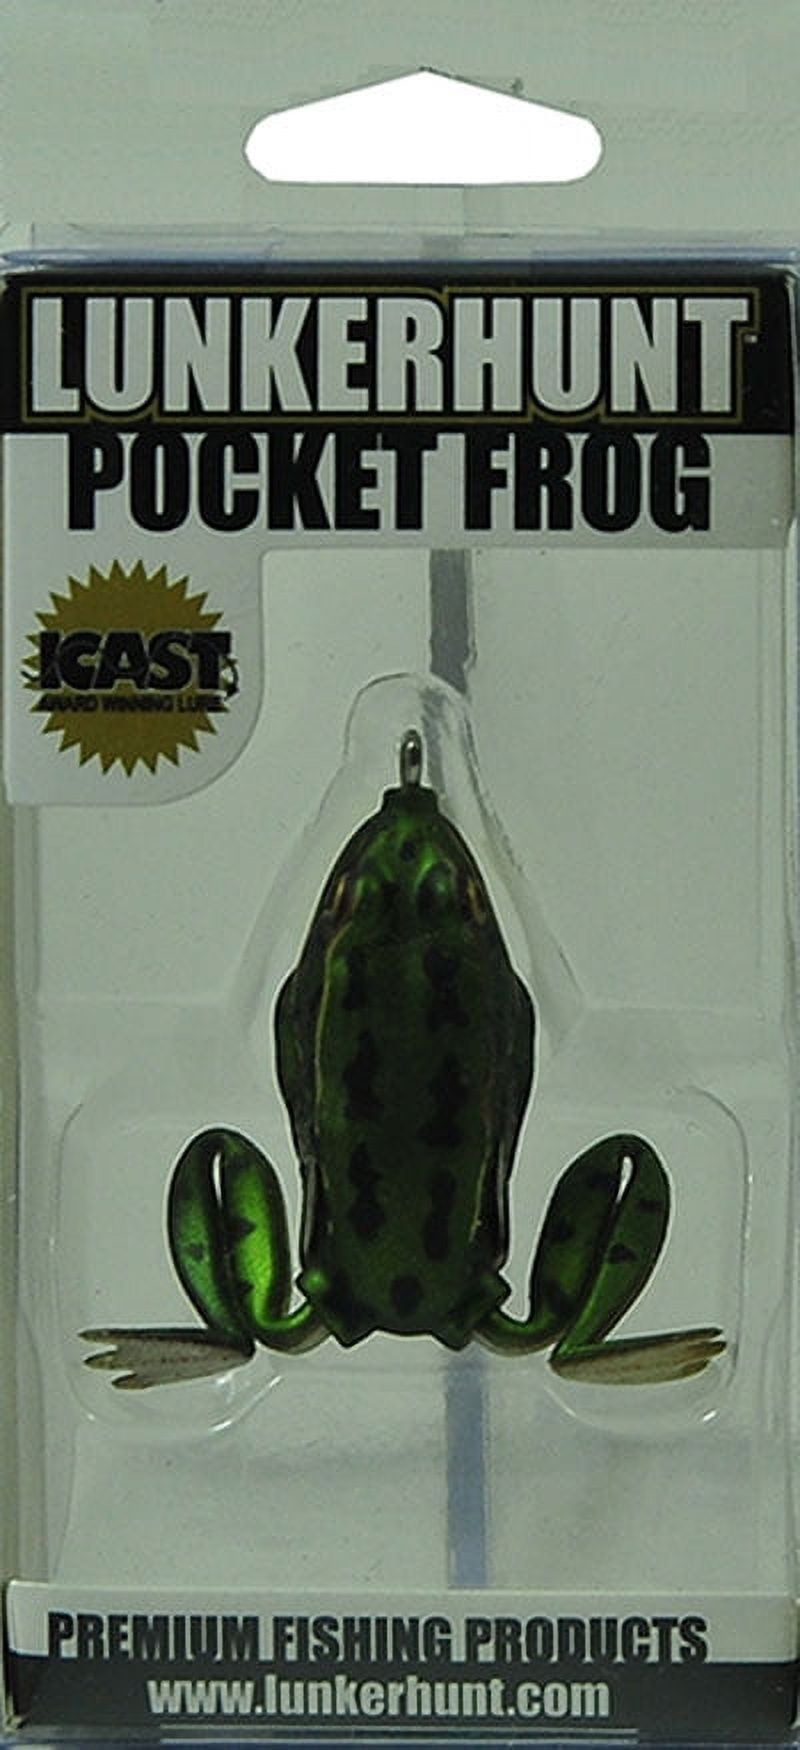 Lunkerhunt Pocket Frog, Topwater Lure, Green Tea,1.75 in,1/4 oz